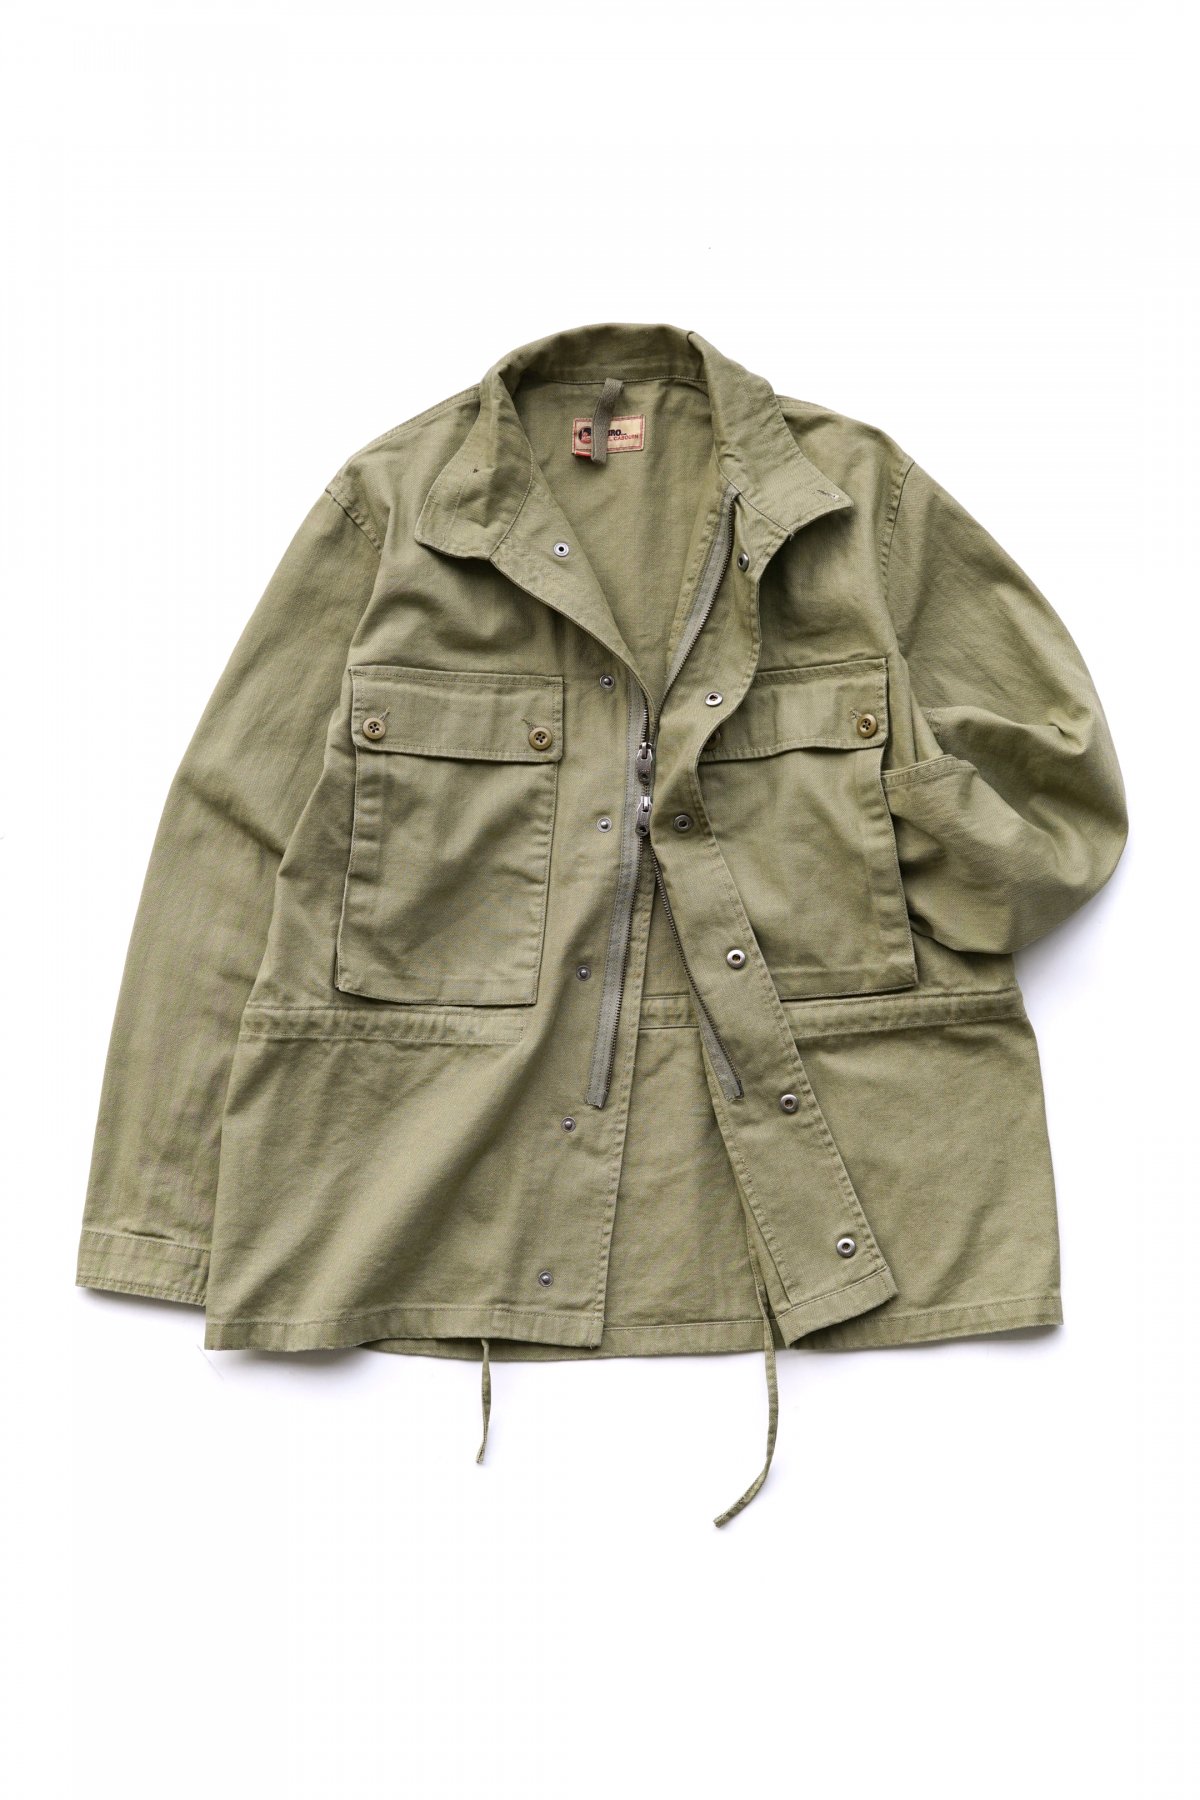 Nigel Cabourn LYBRO military jacket - ジャケット・アウター